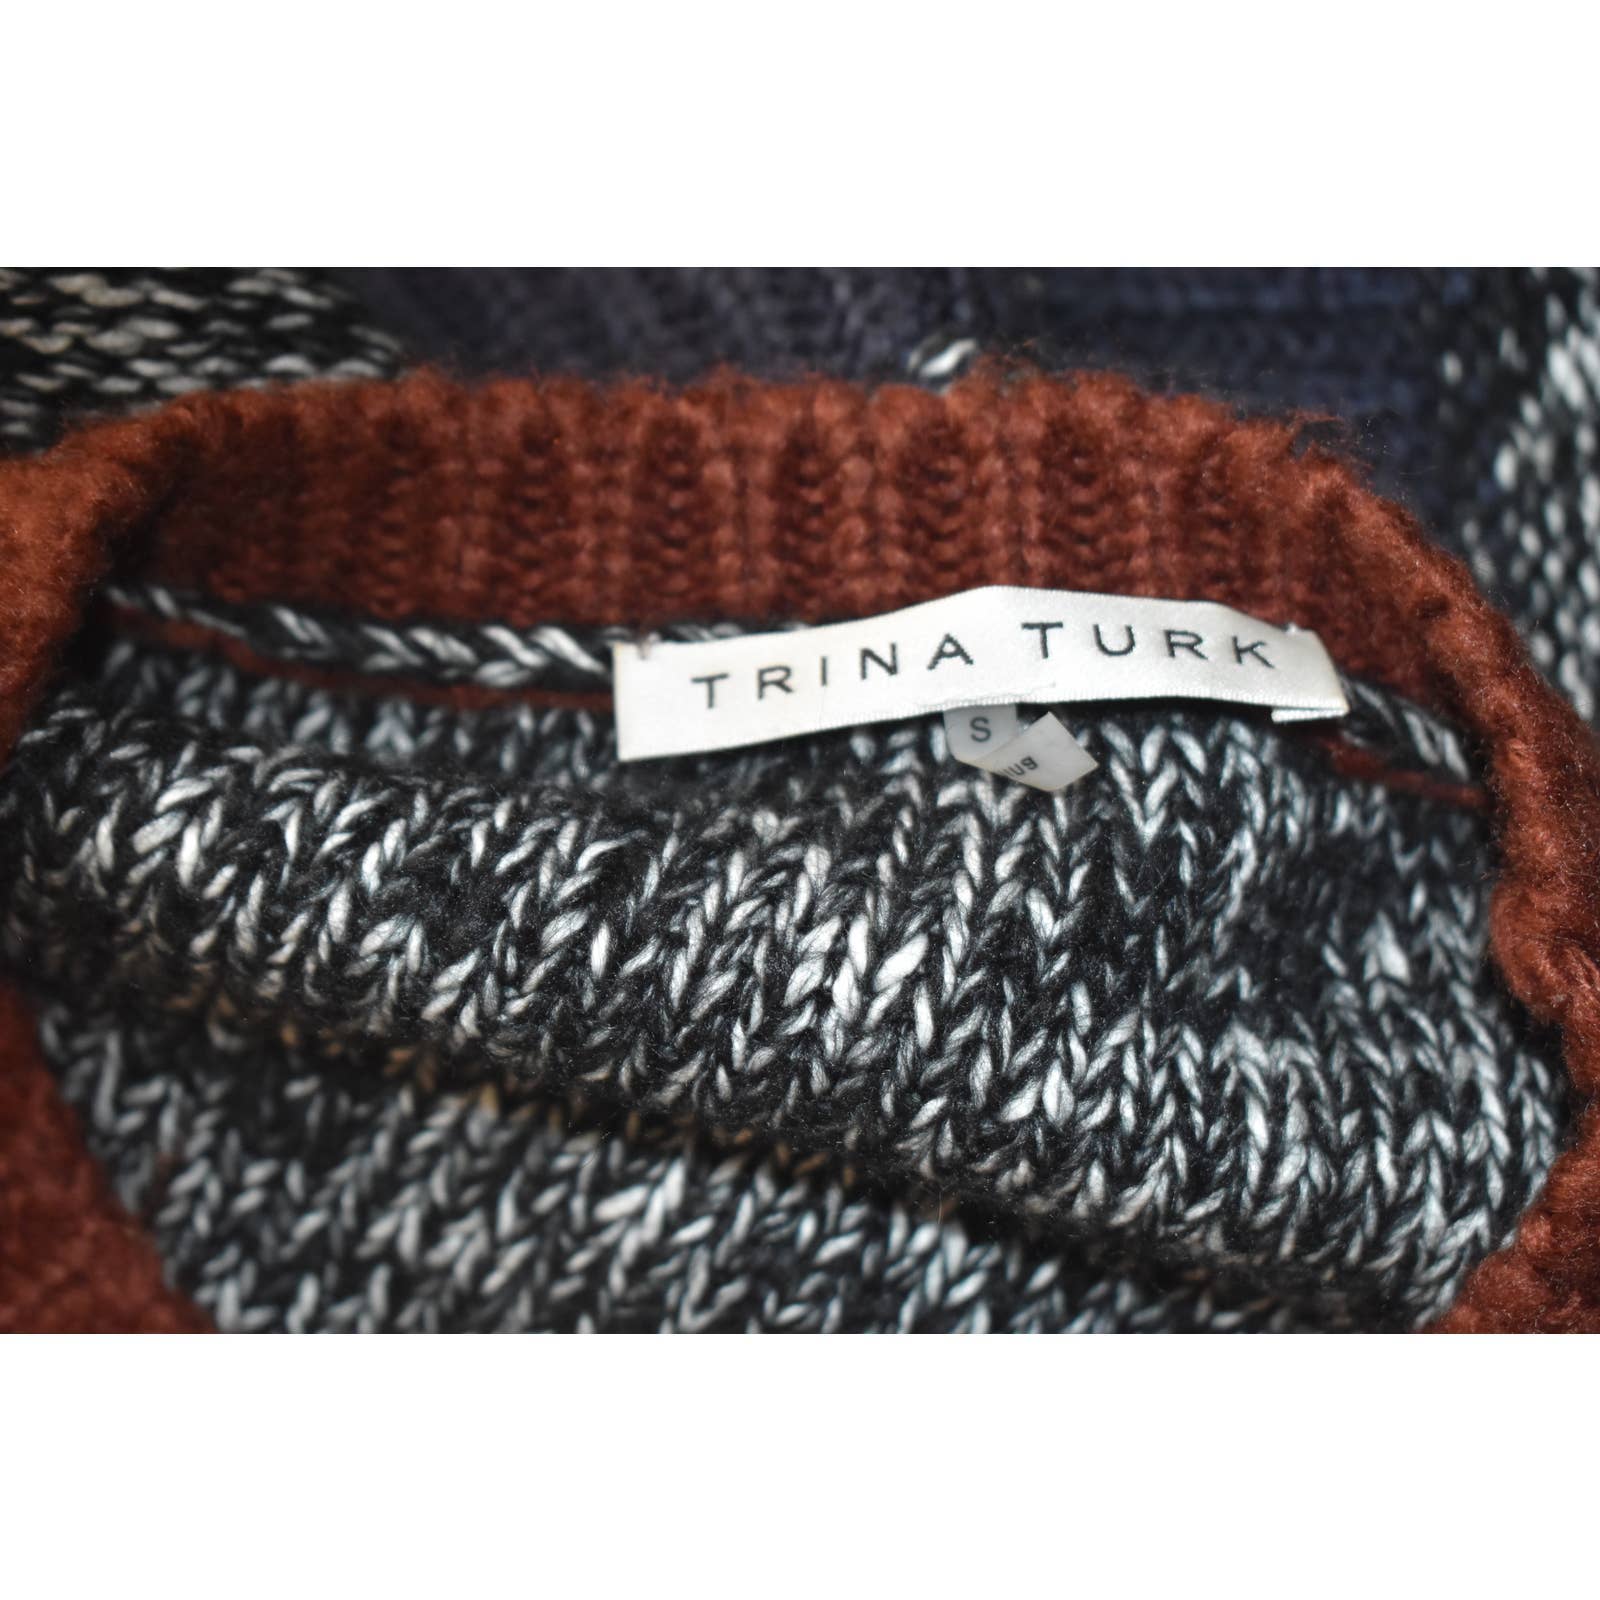 Trina Turk Black and White Knit Crewneck Sweater - S